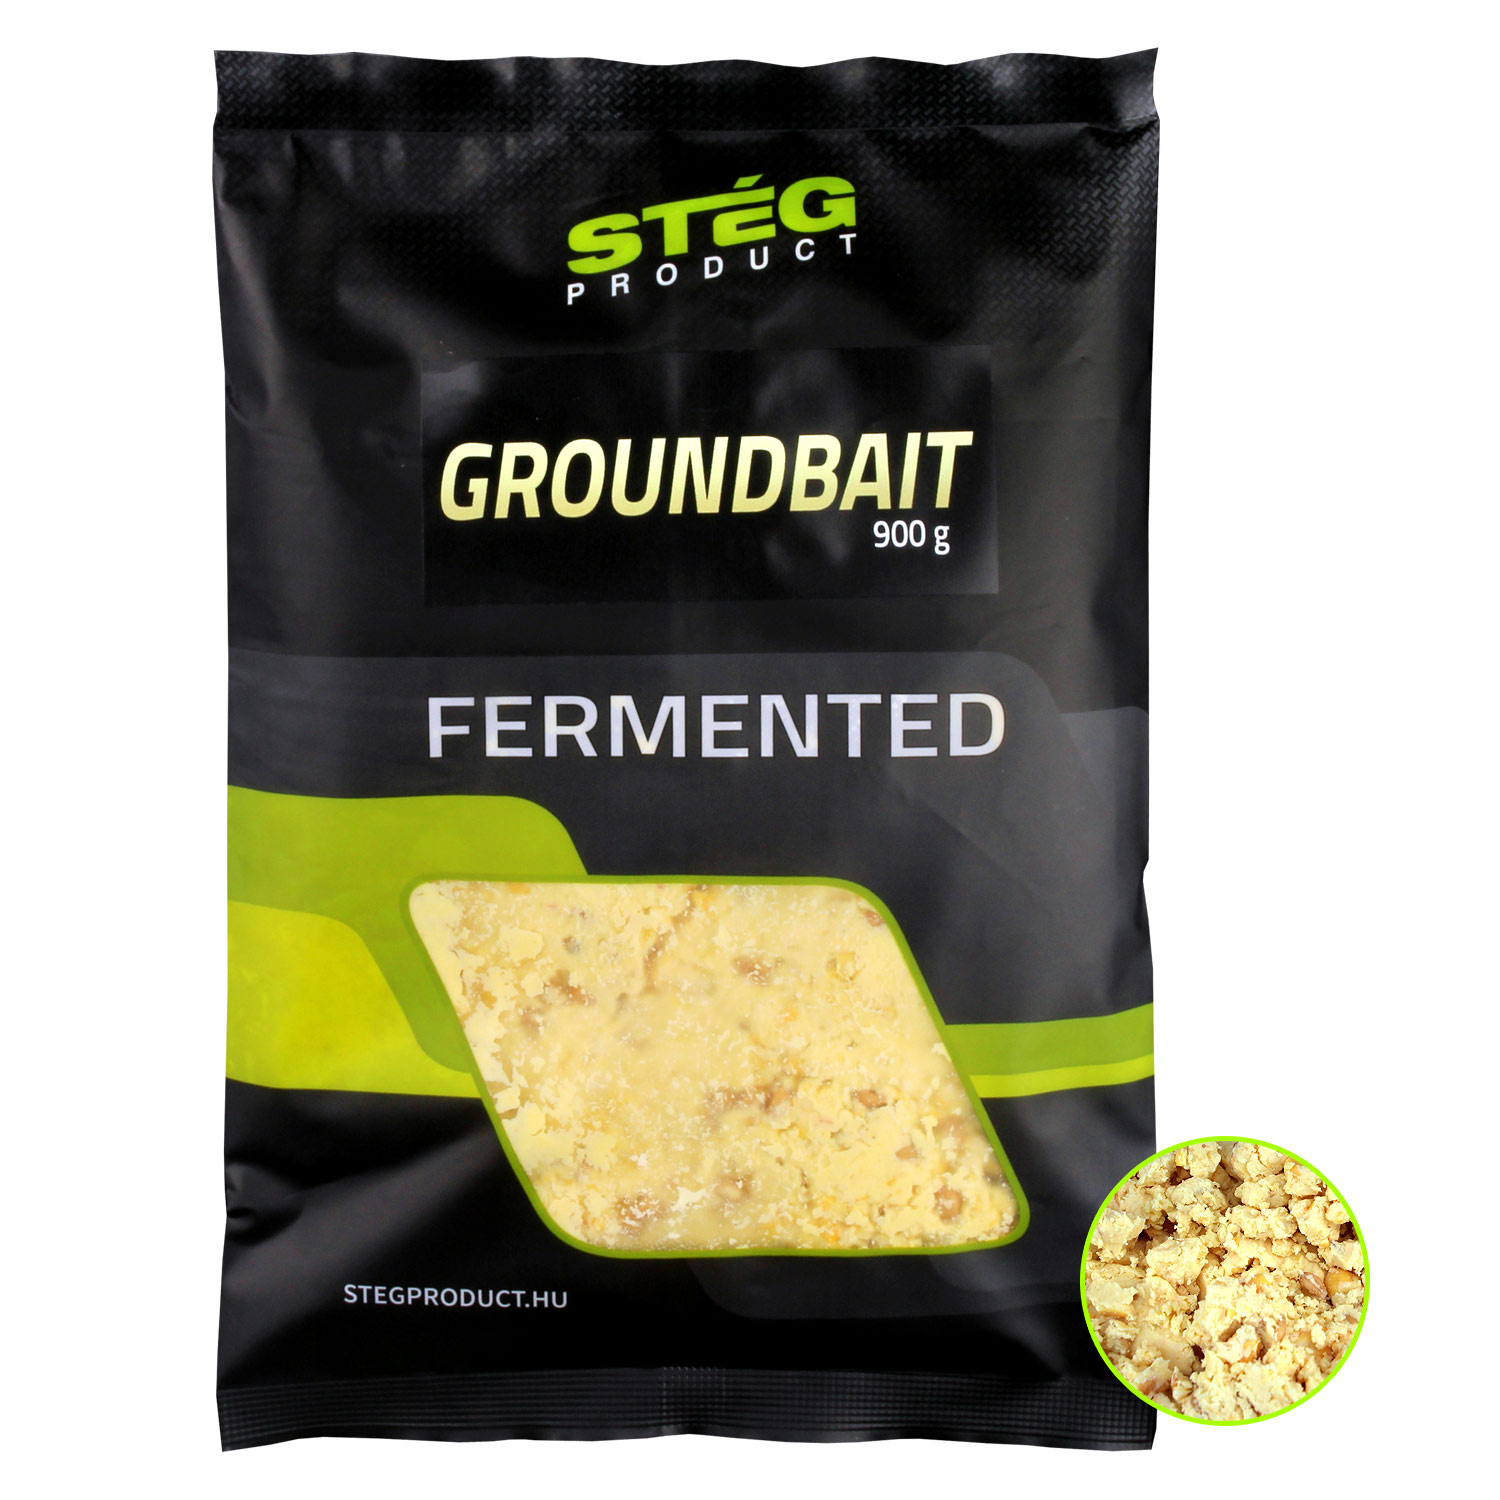 Stg Product Fermented Groundbait 900g